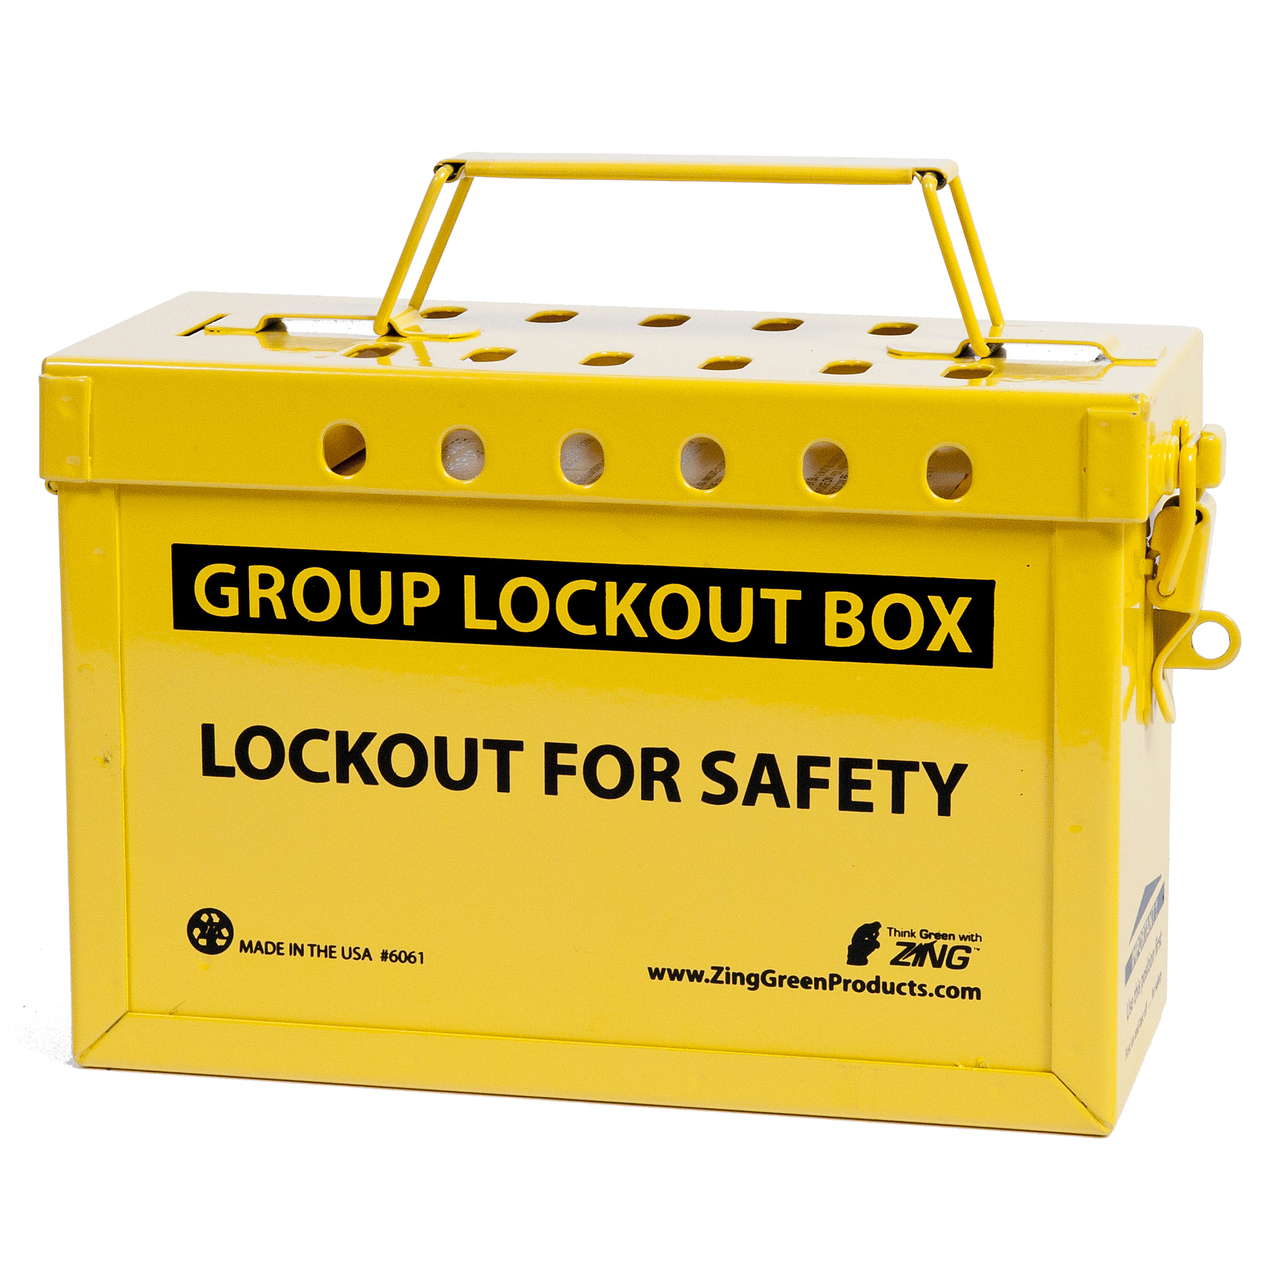 ZING RecycLockout Group Lockout Box (Yellow)